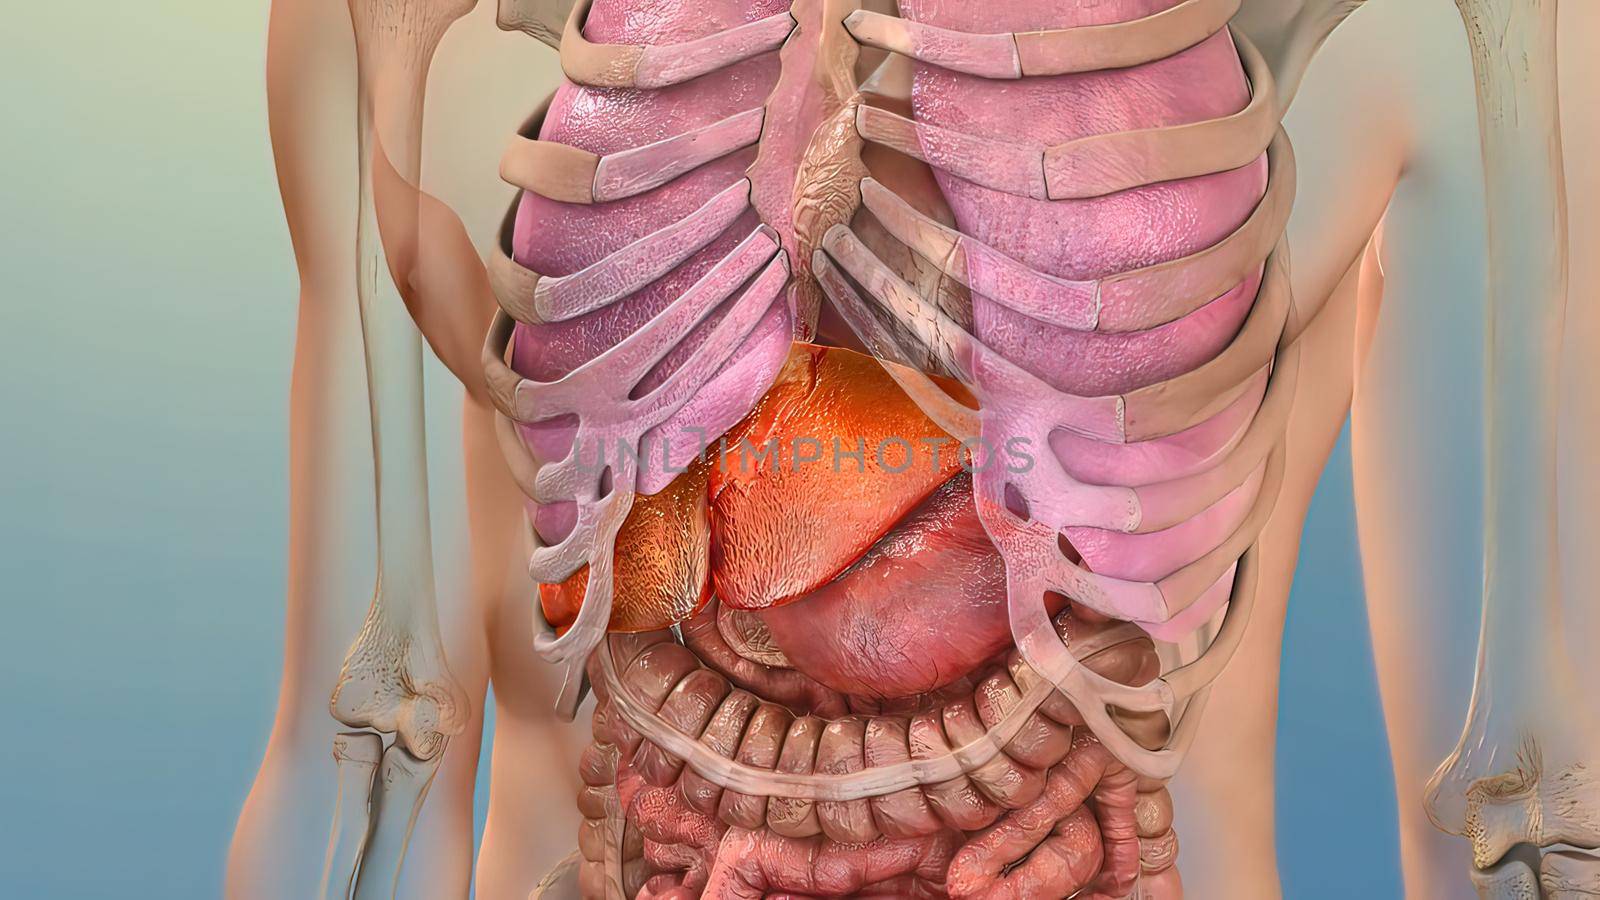 Human Internal Digestive Organ Liver Anatomy 3D illustration Concept. by creativepic